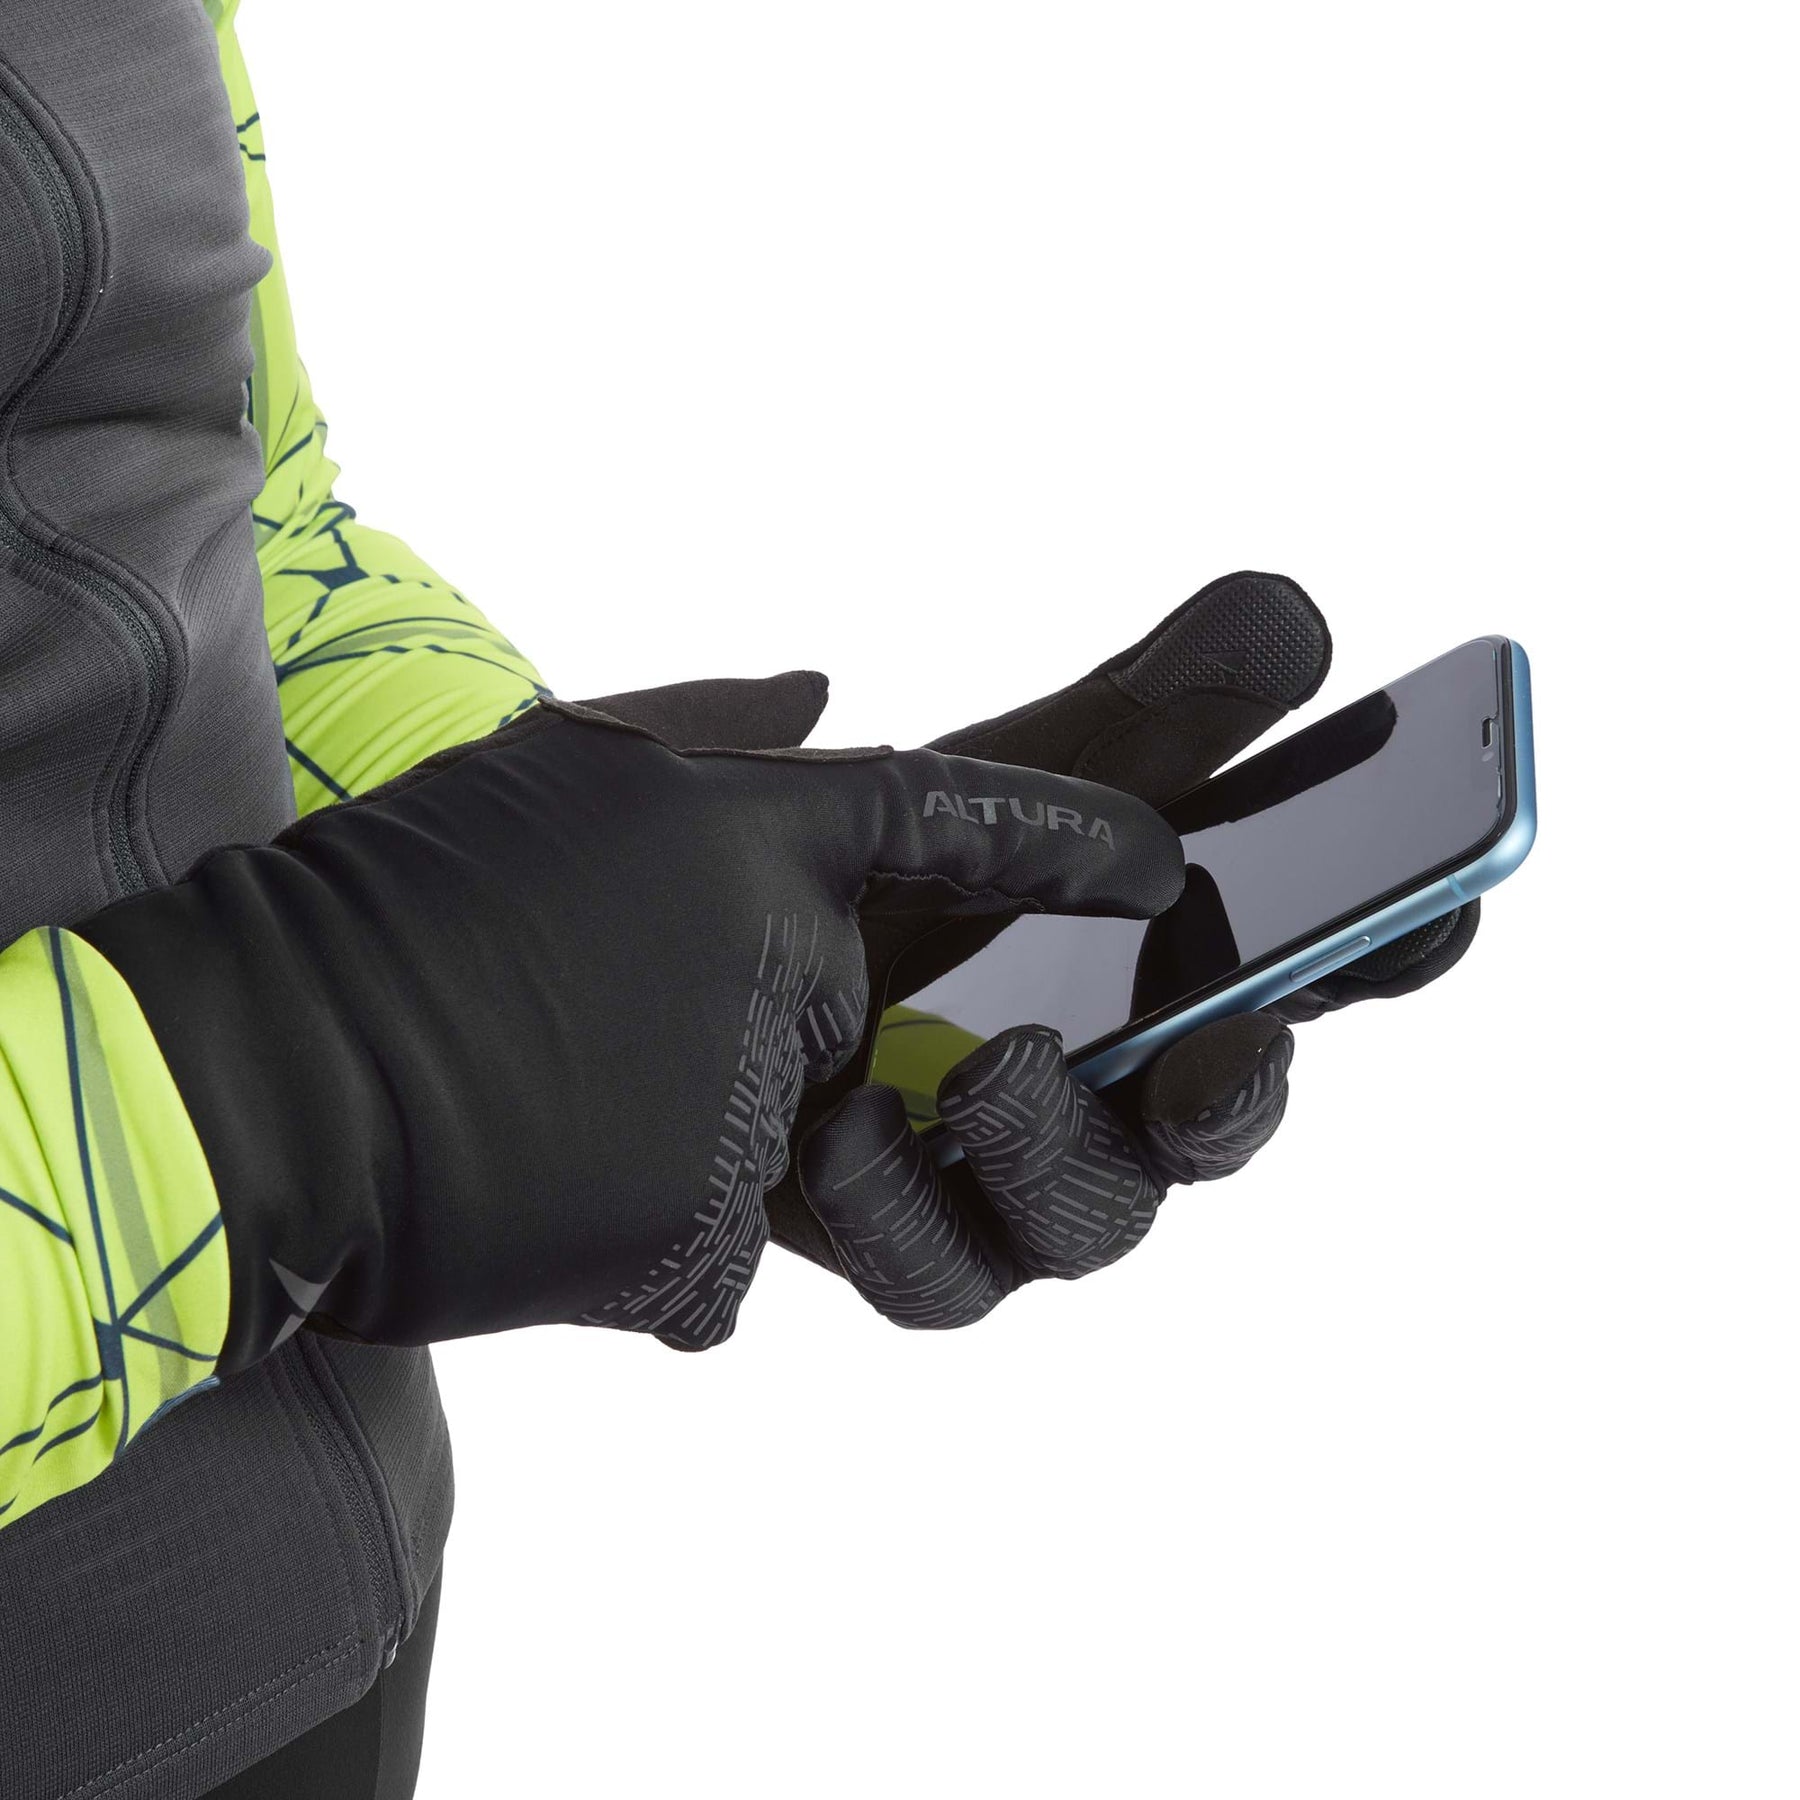 Altura Polartec Waterproof Gloves